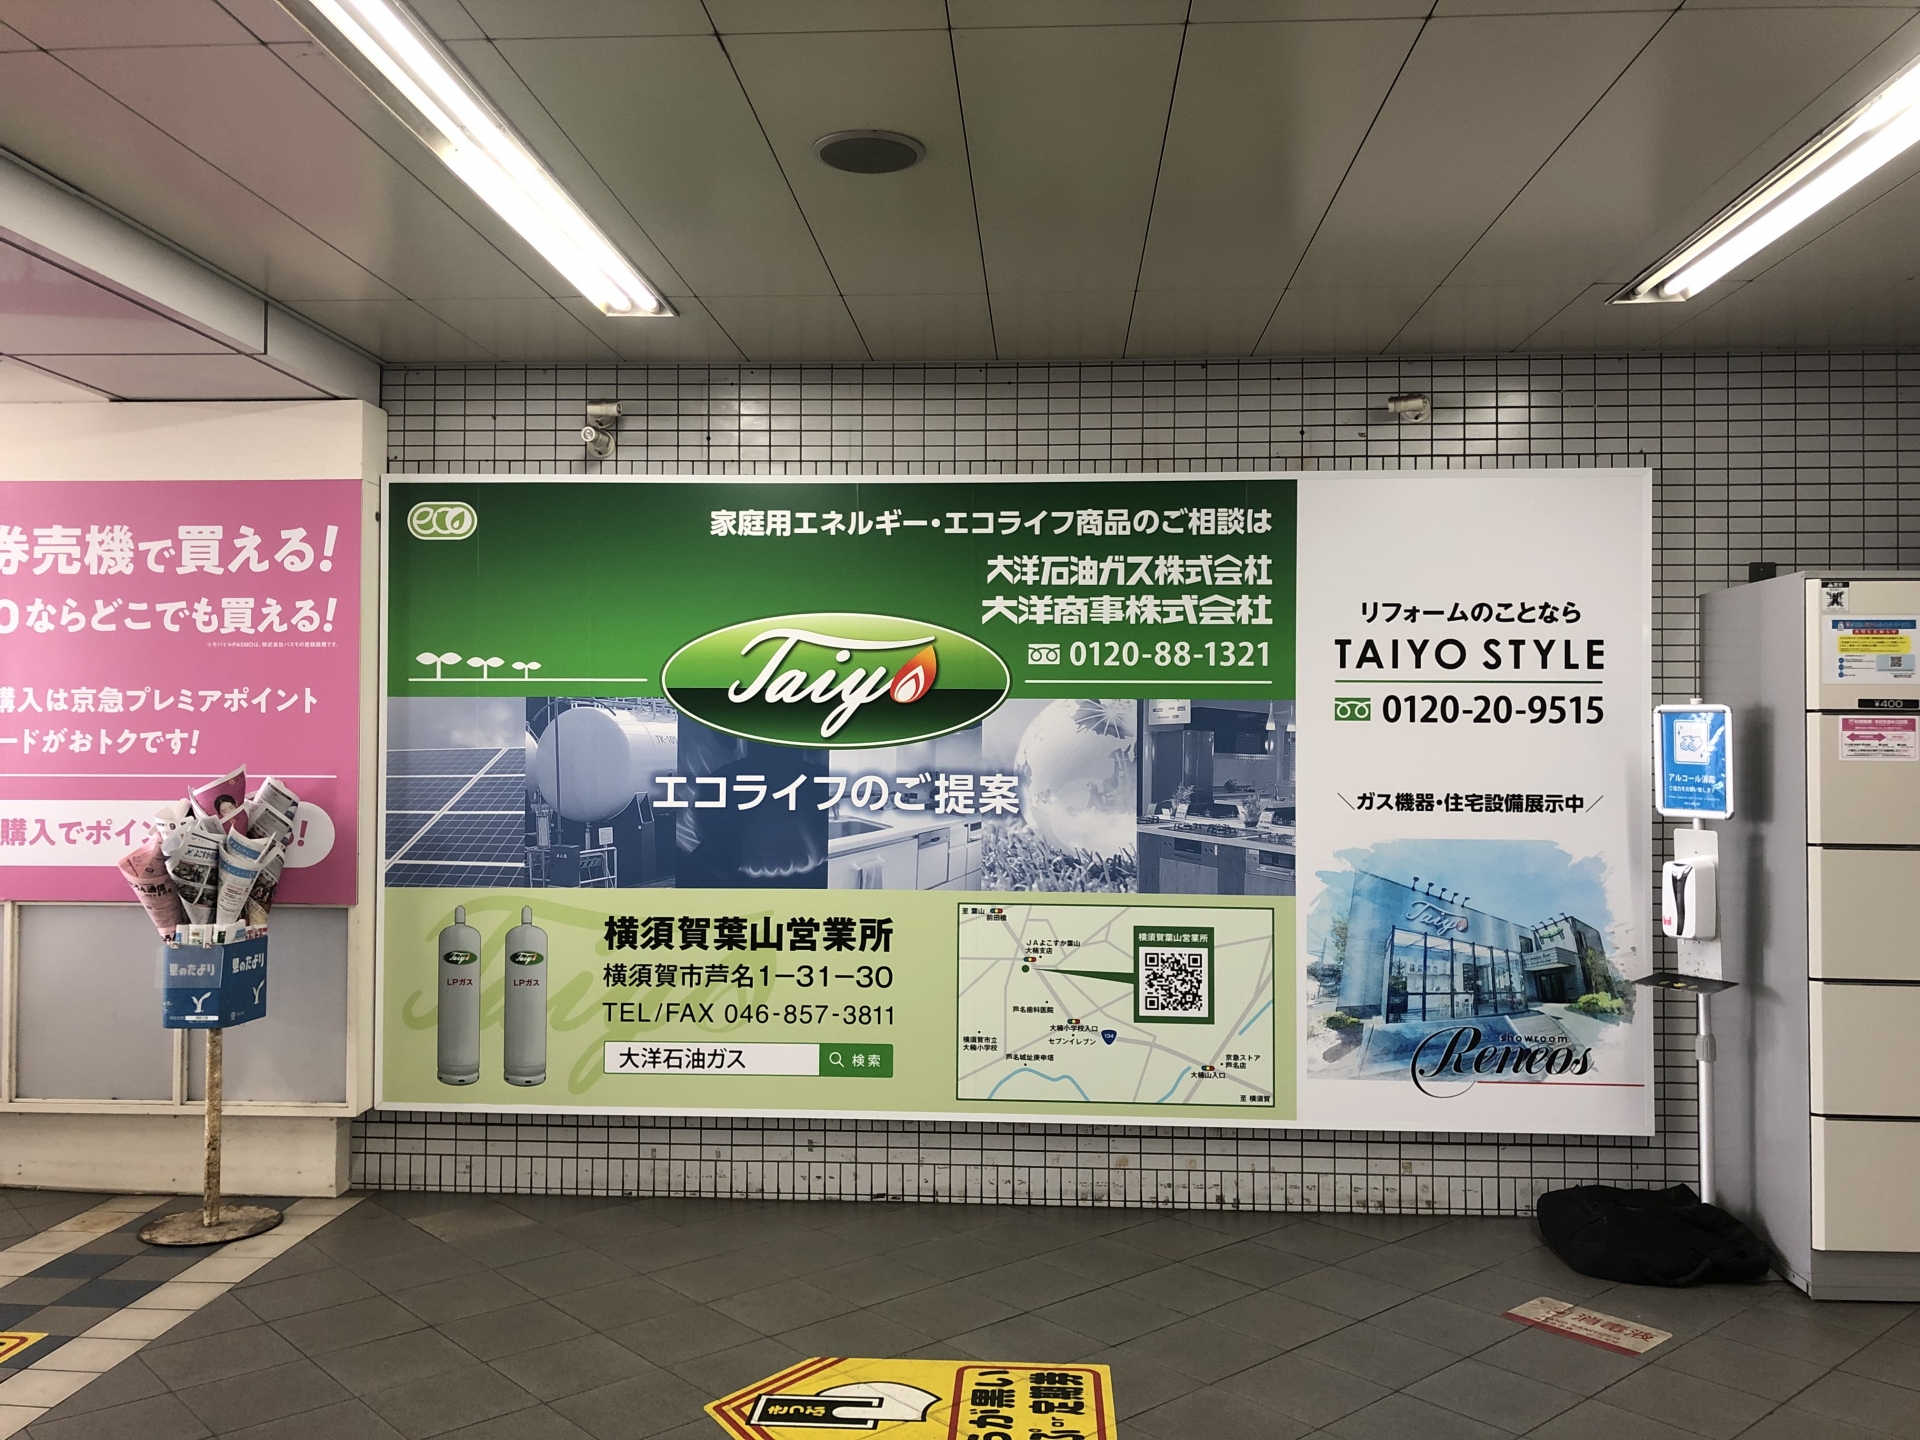 Vol.17　京浜急行電鉄、横須賀中央駅に看板を設置しました